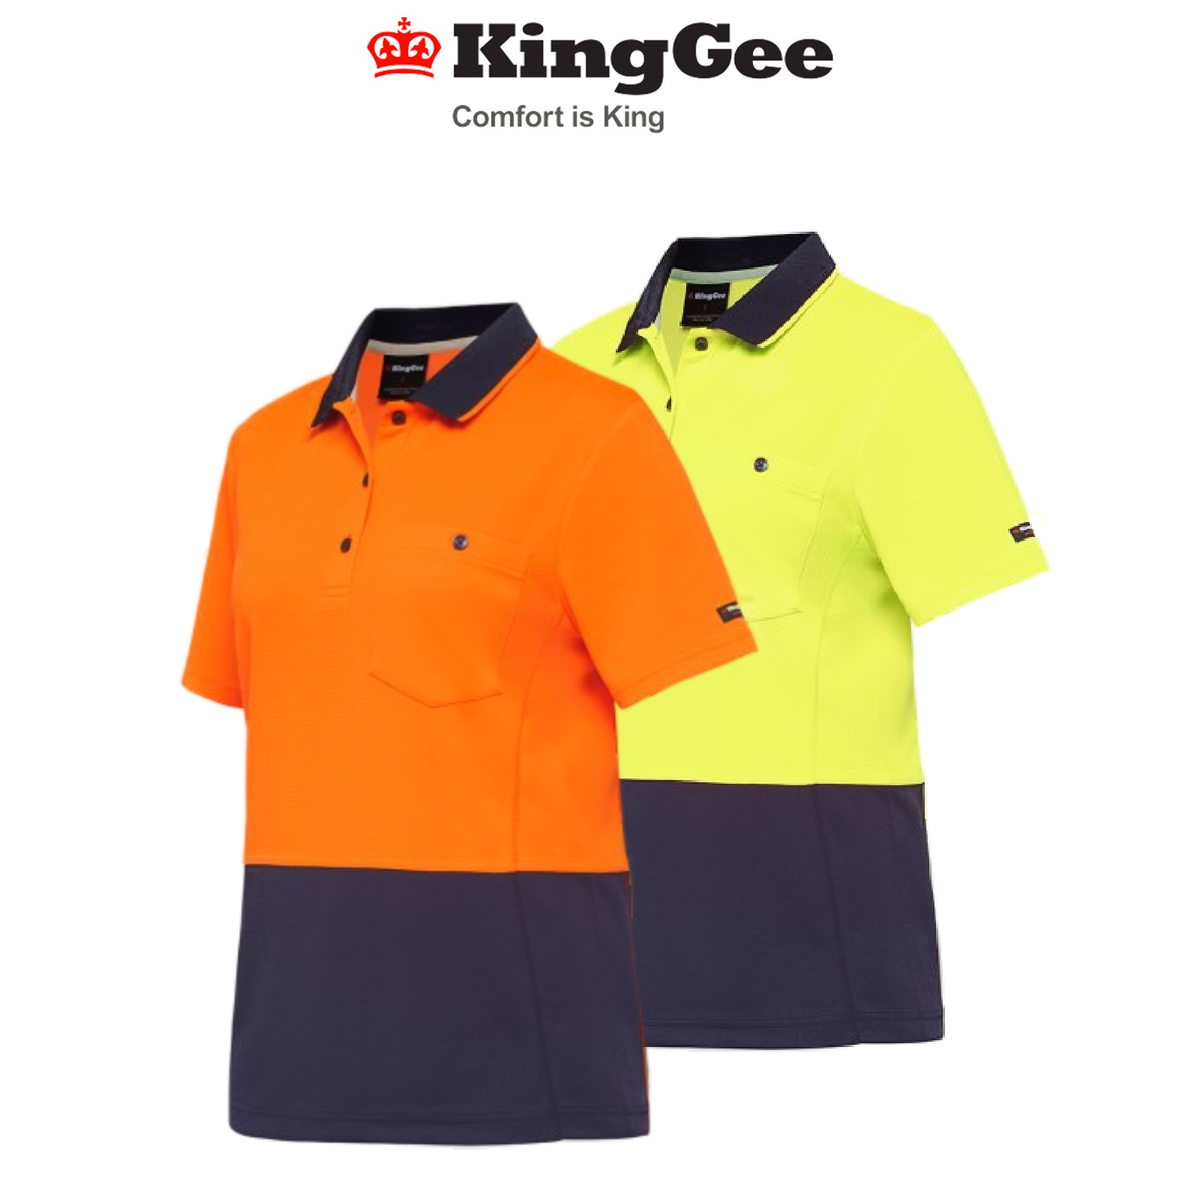 KingGee Womens WorkCool Spliced Polo S/S Shirt Hyperfreeze Work Comfy K44735